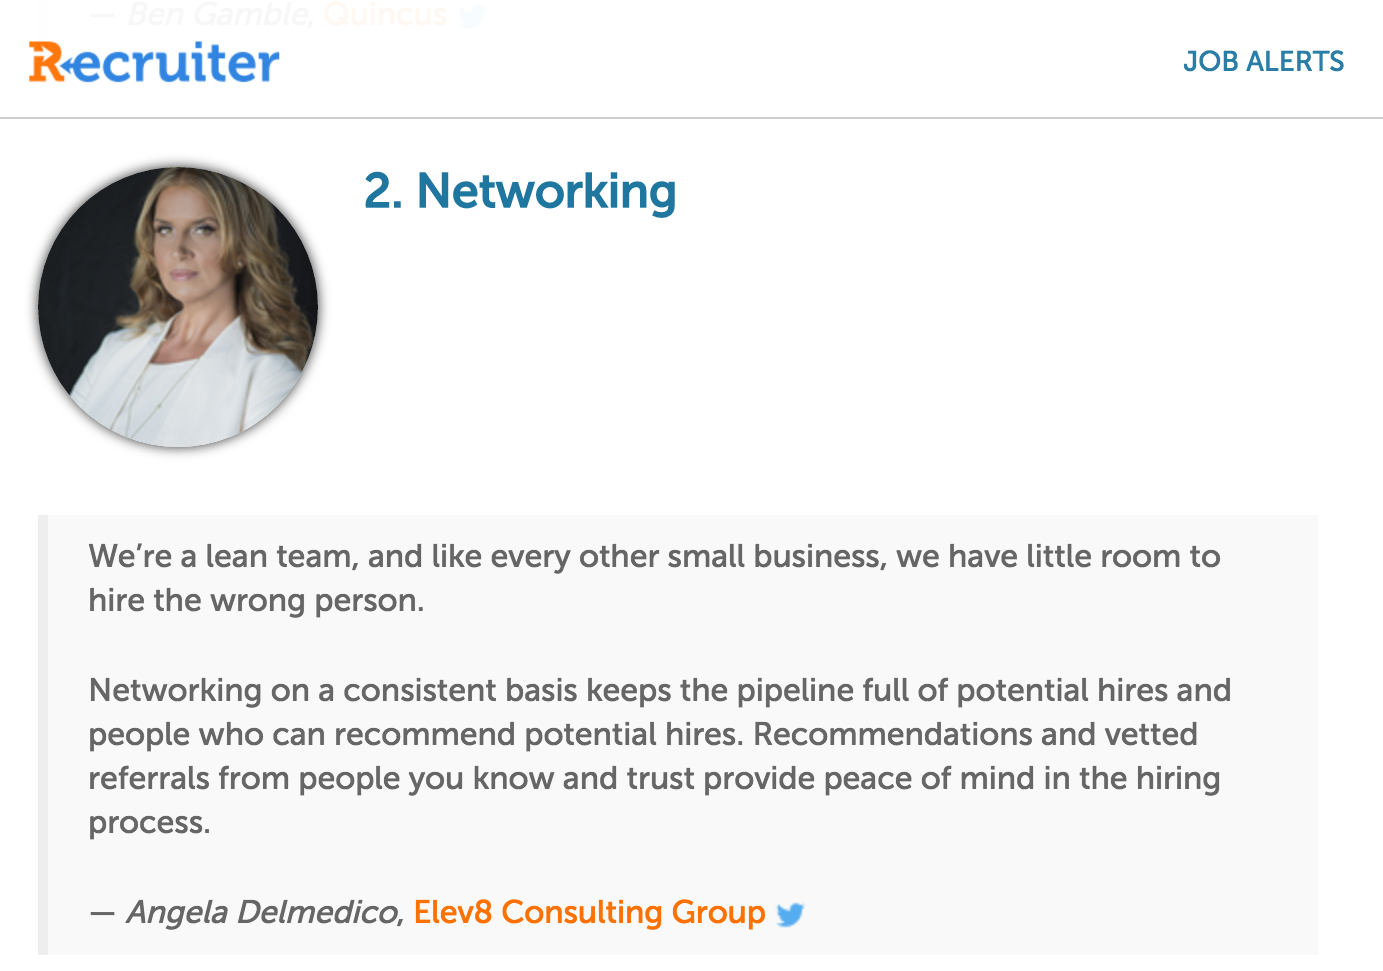 Angela Delmedico, Elev8 Consulting Group Recruiter 